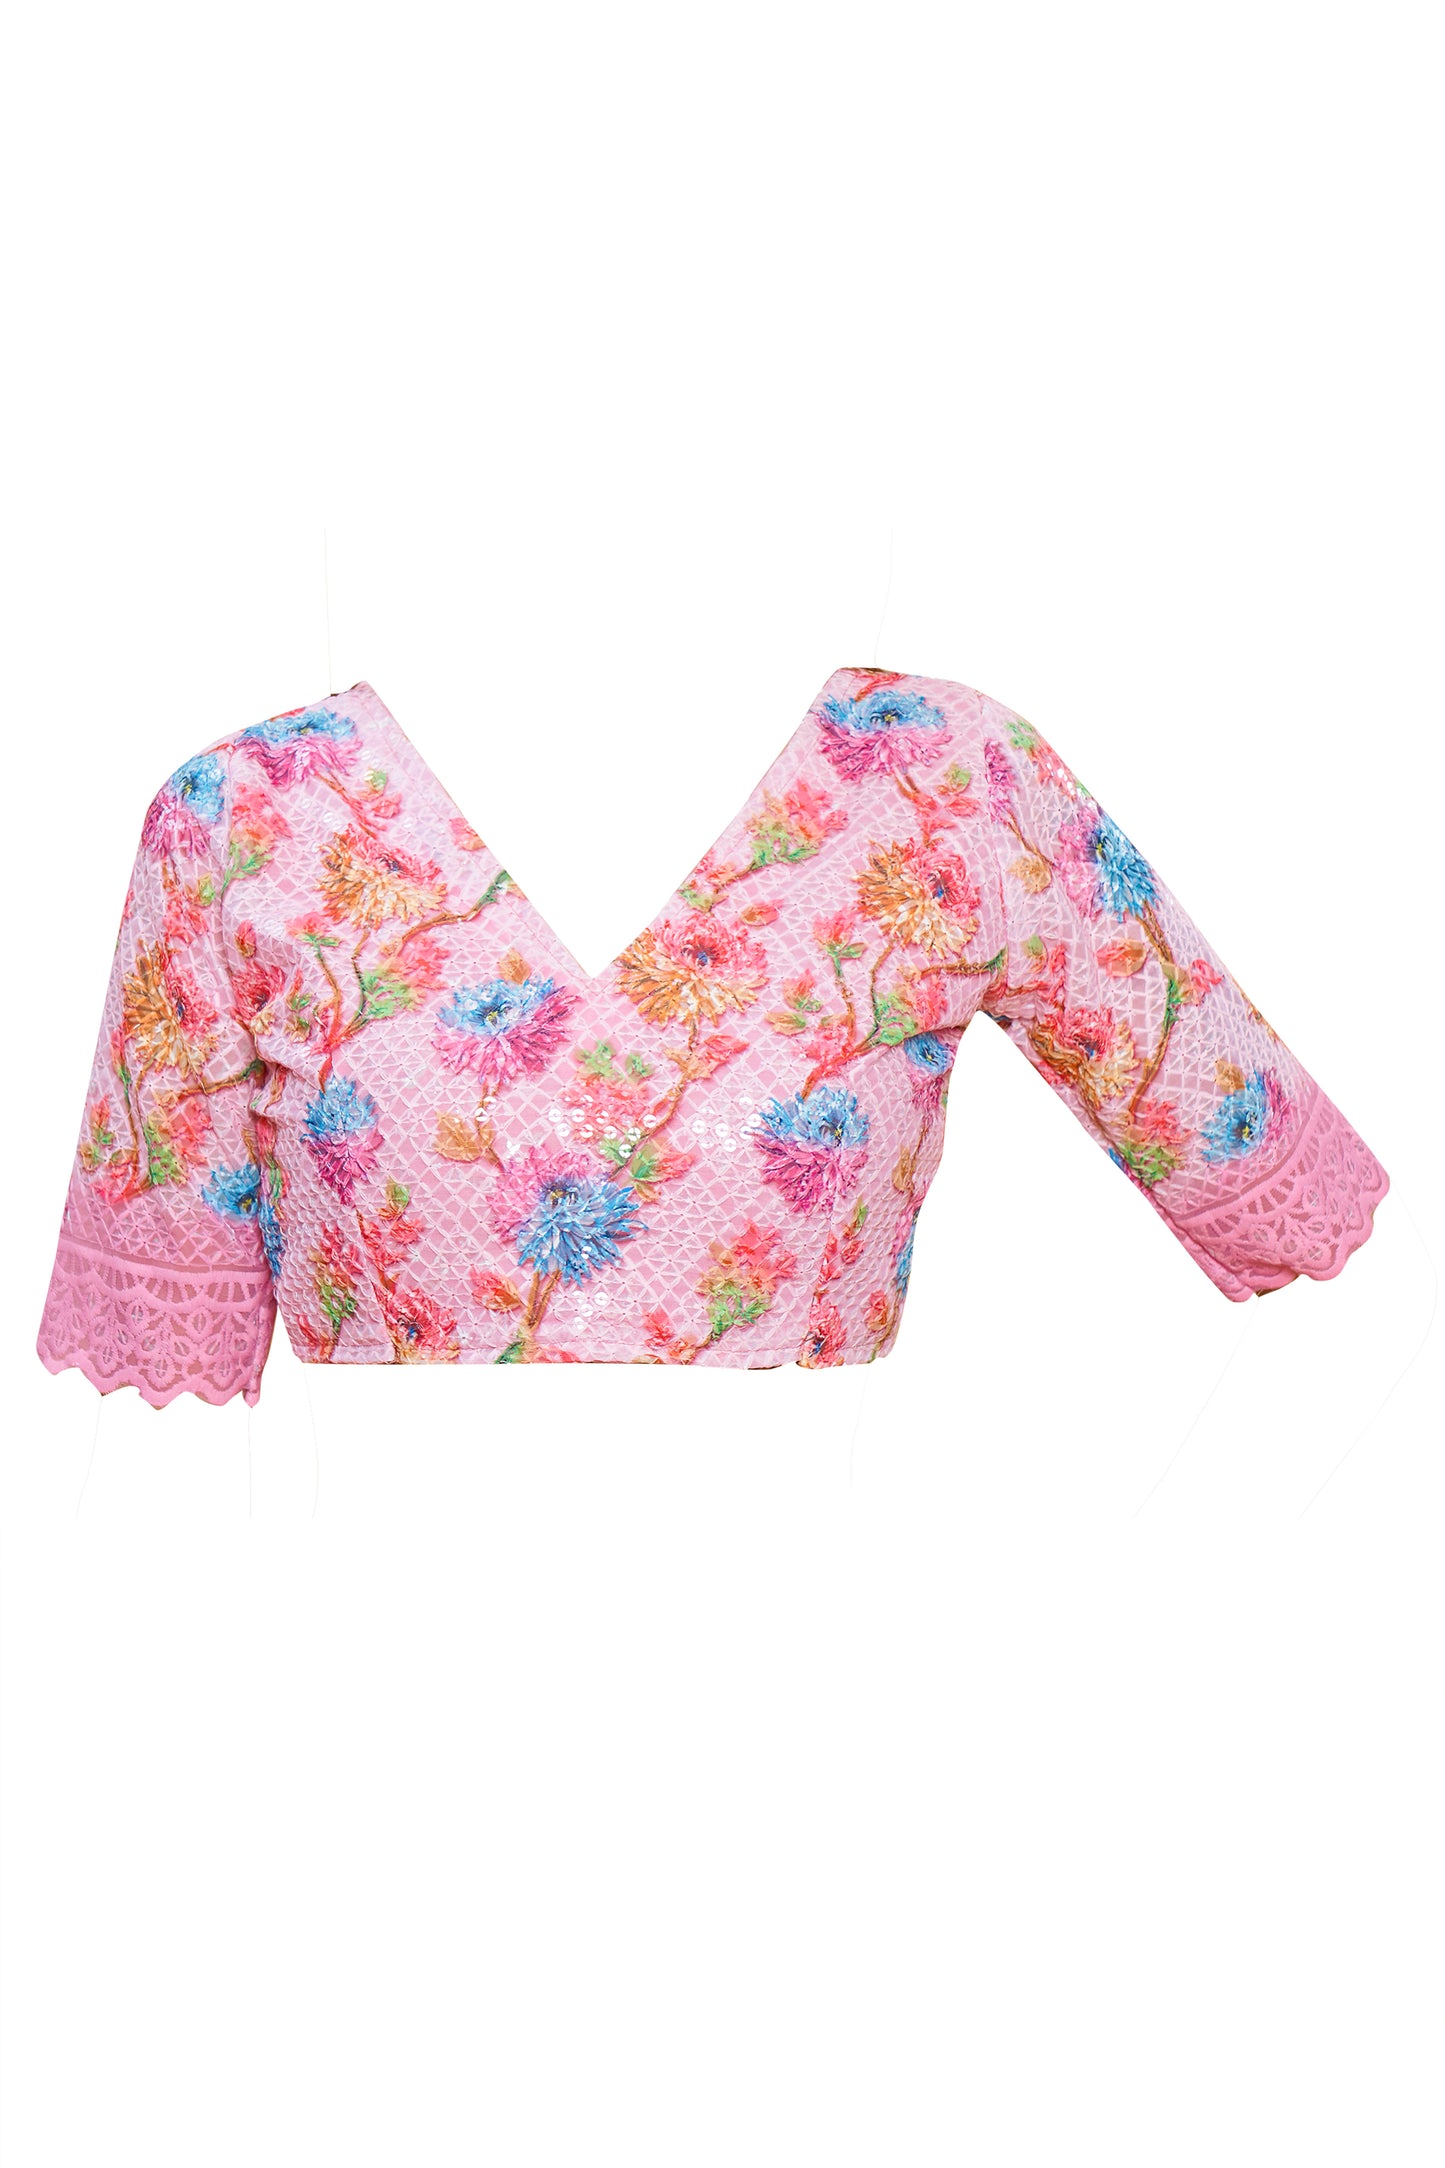 Sagarika Catalogue Pink Coloured Fancy Fabric Saree with Digital Shifli Tone to Tone Blouse